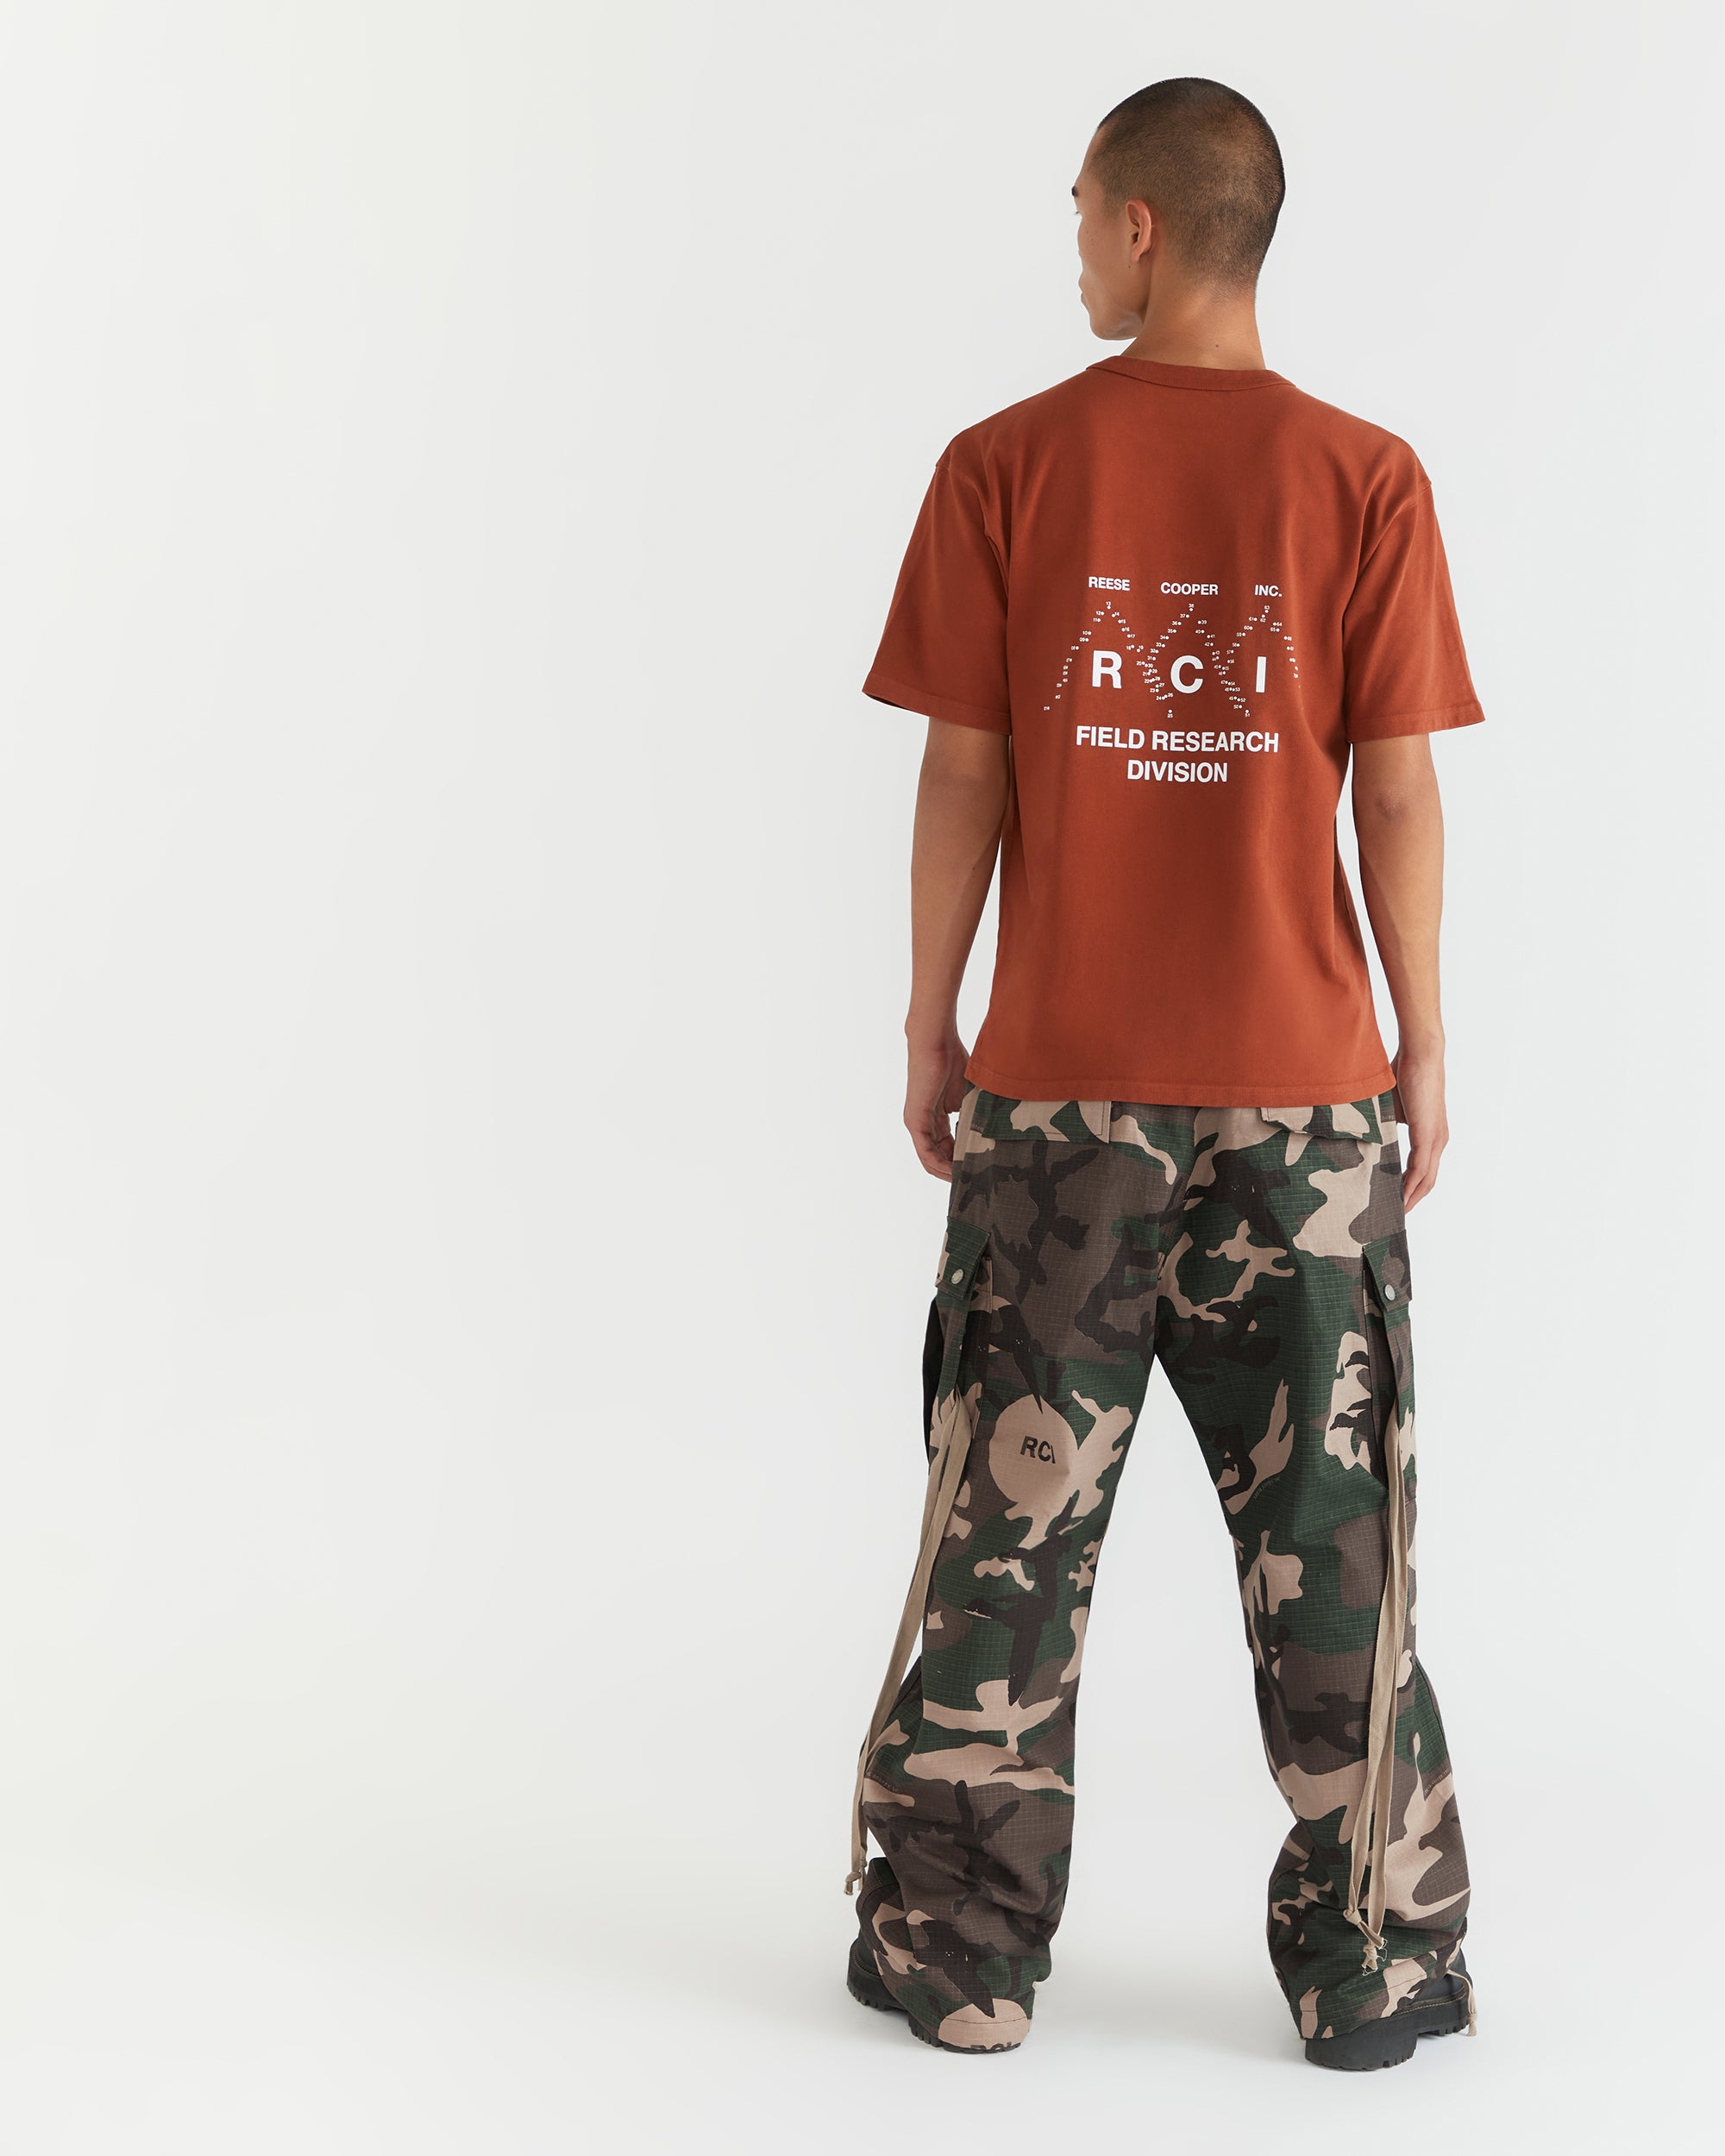 Men - Field Research Division T-Shirt - Burnt Orange - 1